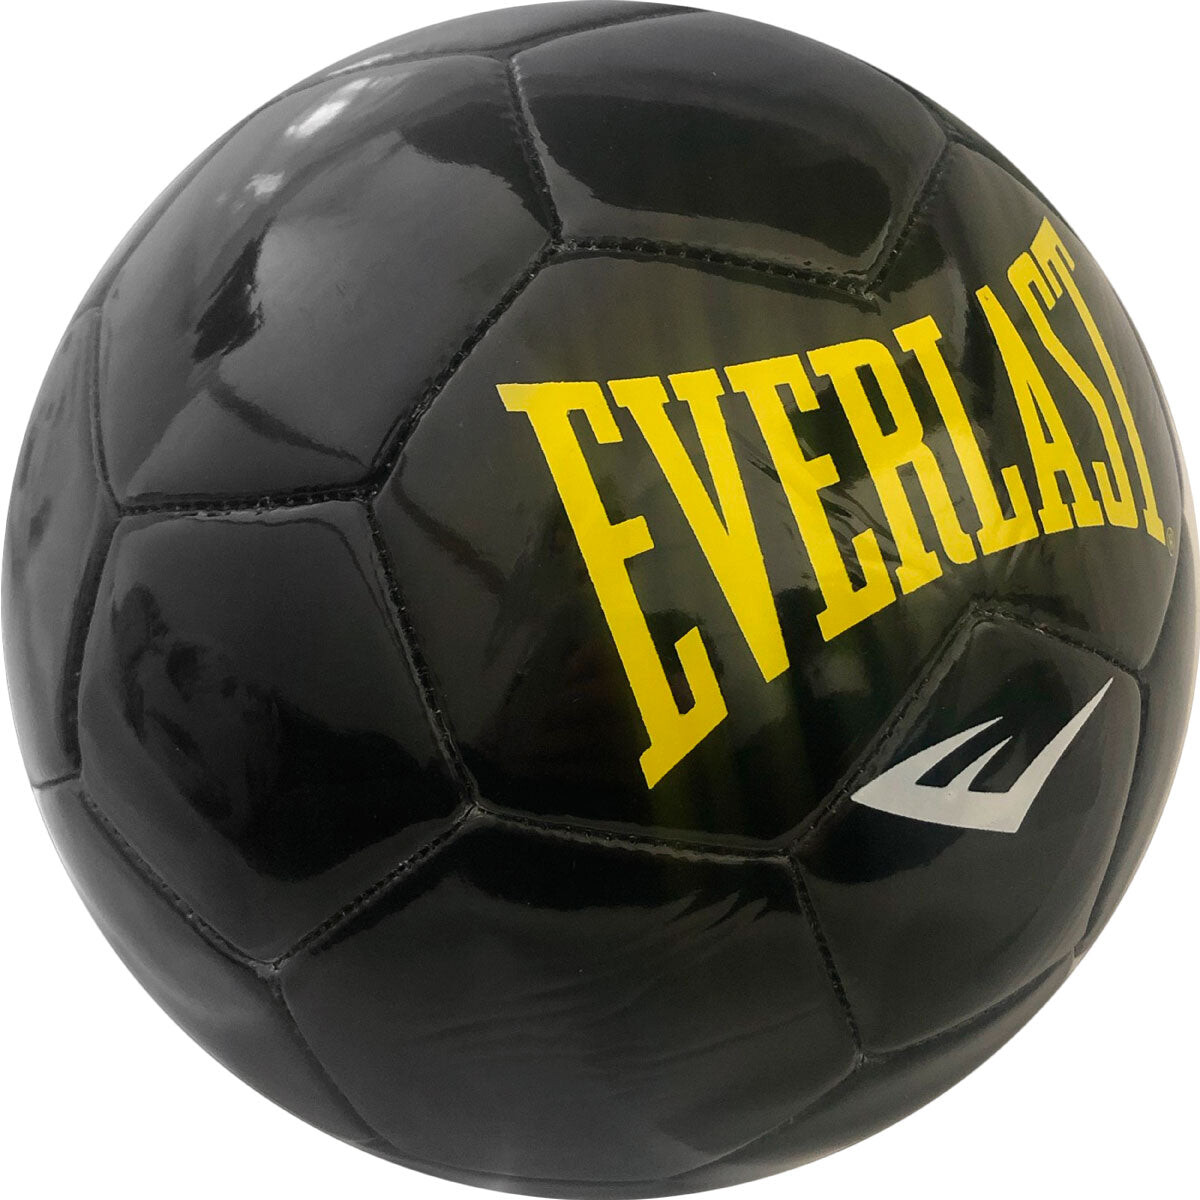 Pelota Everlast Fútbol N5 PU Calidad Varios Colores - Negro 